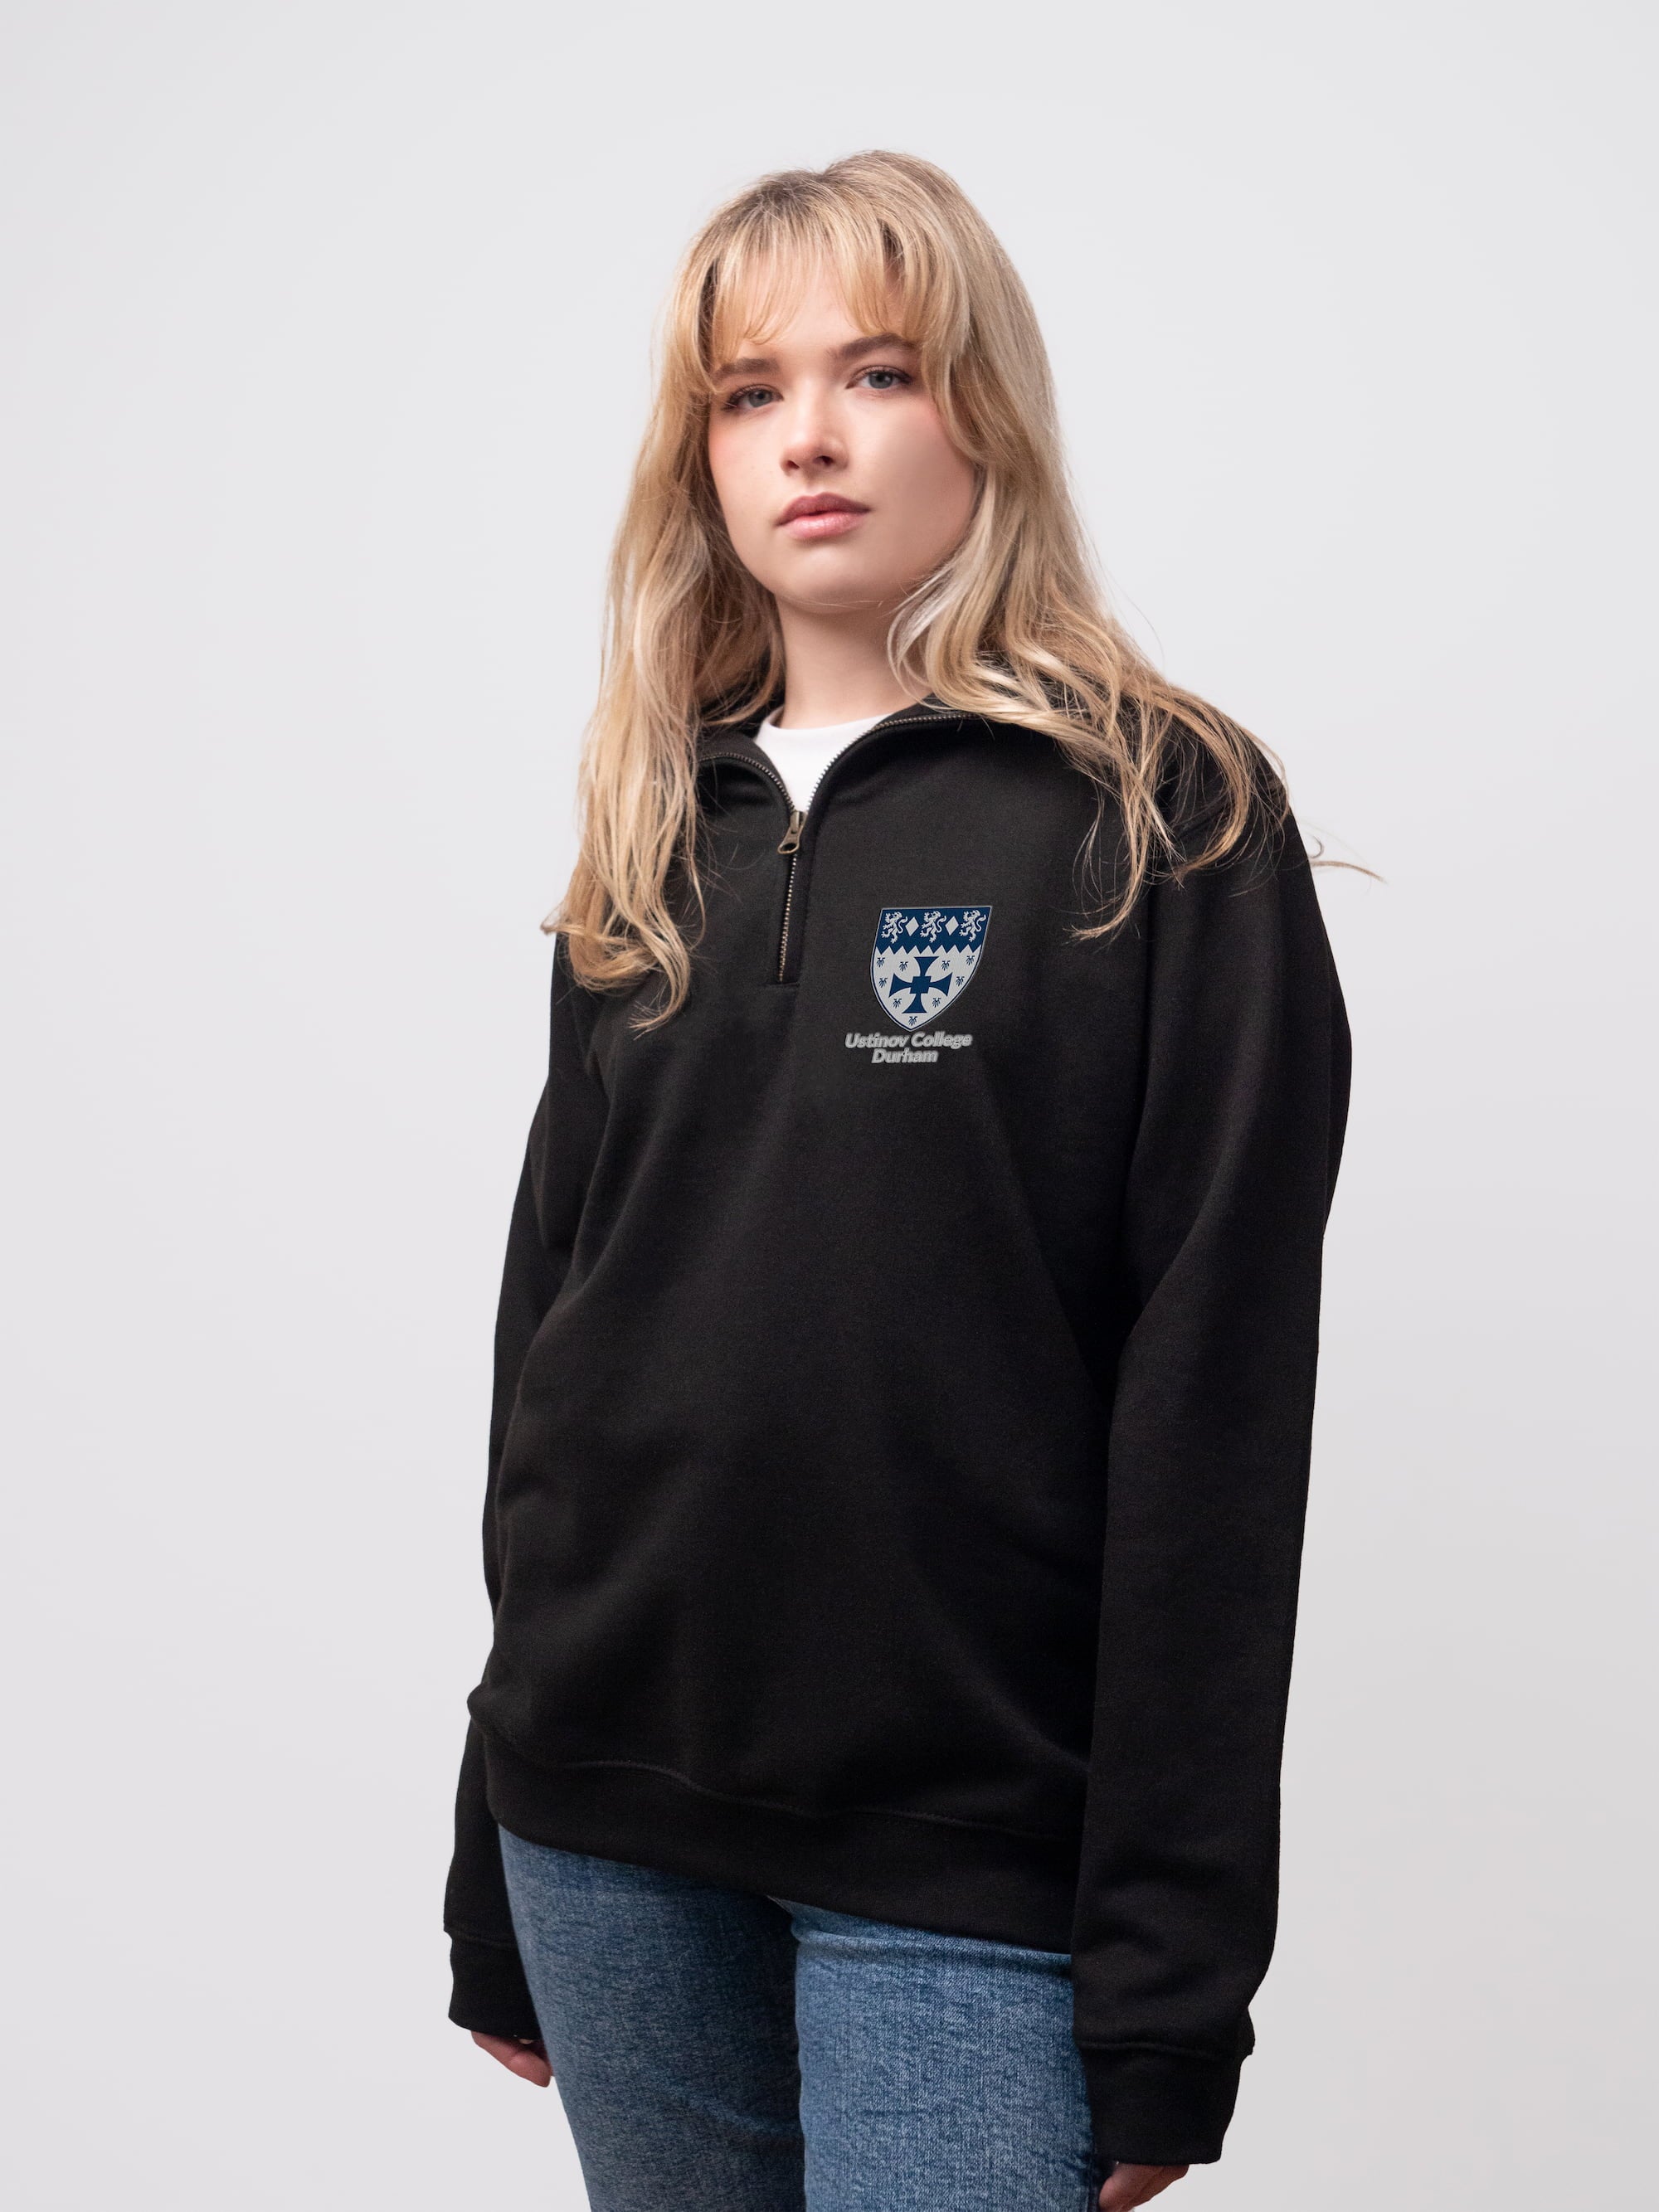 Ustinov student wearing a black 1/4 zip sweatshirt 